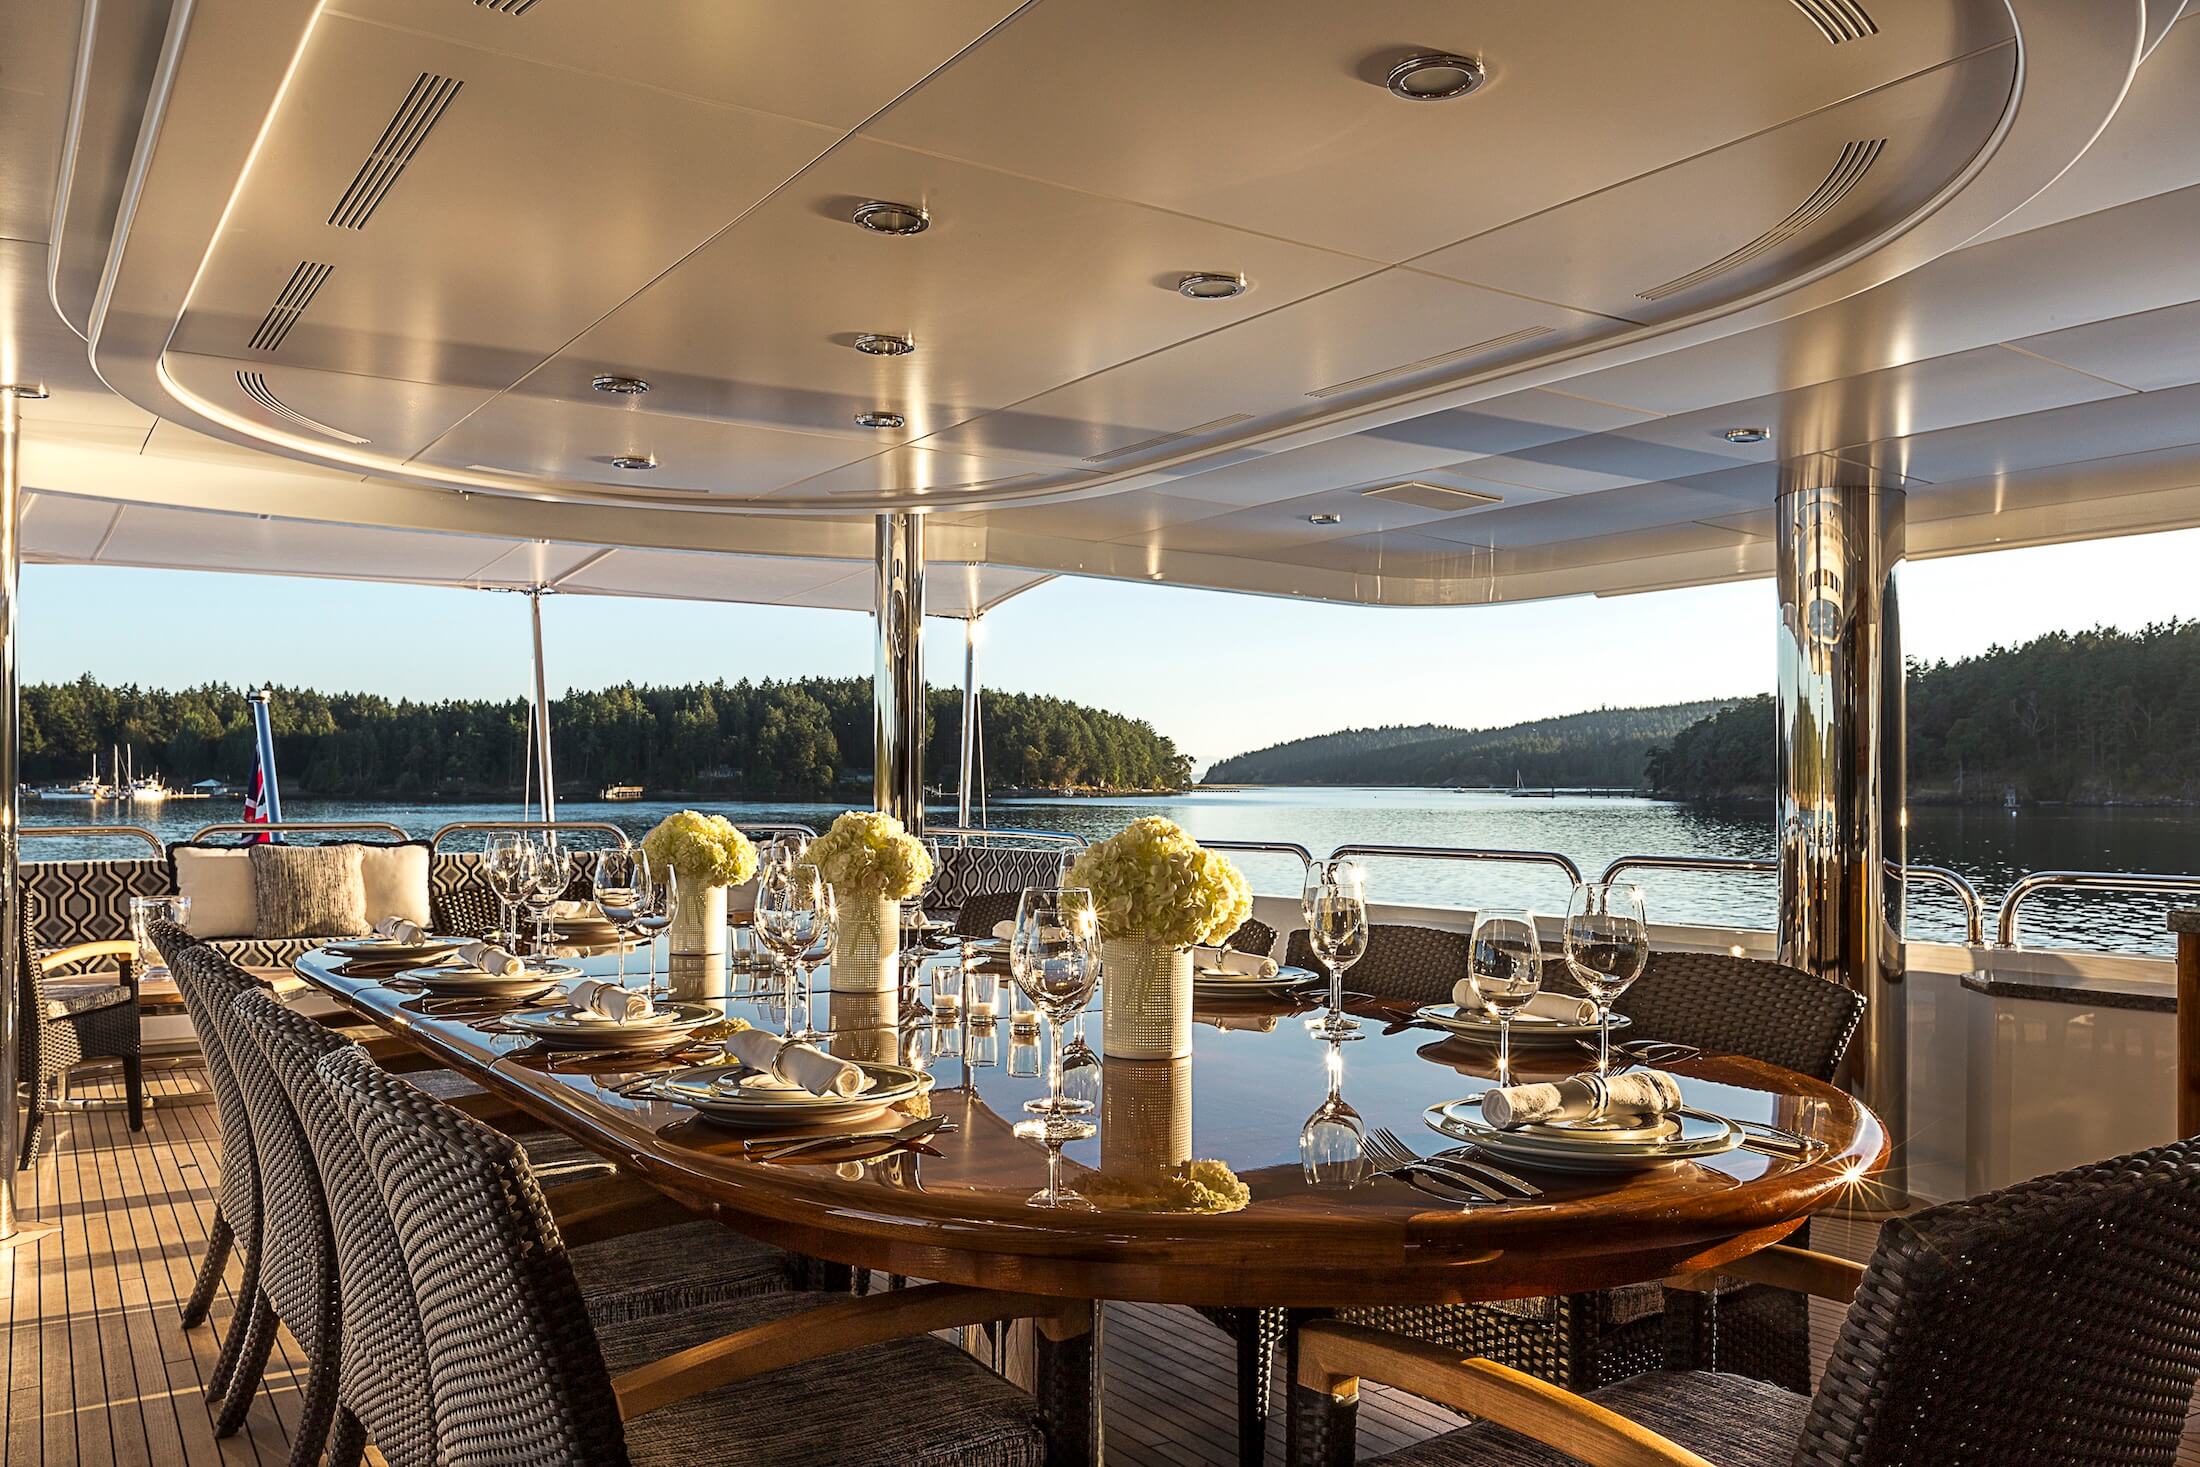 D'Natalin Luxury Yacht exterior dining